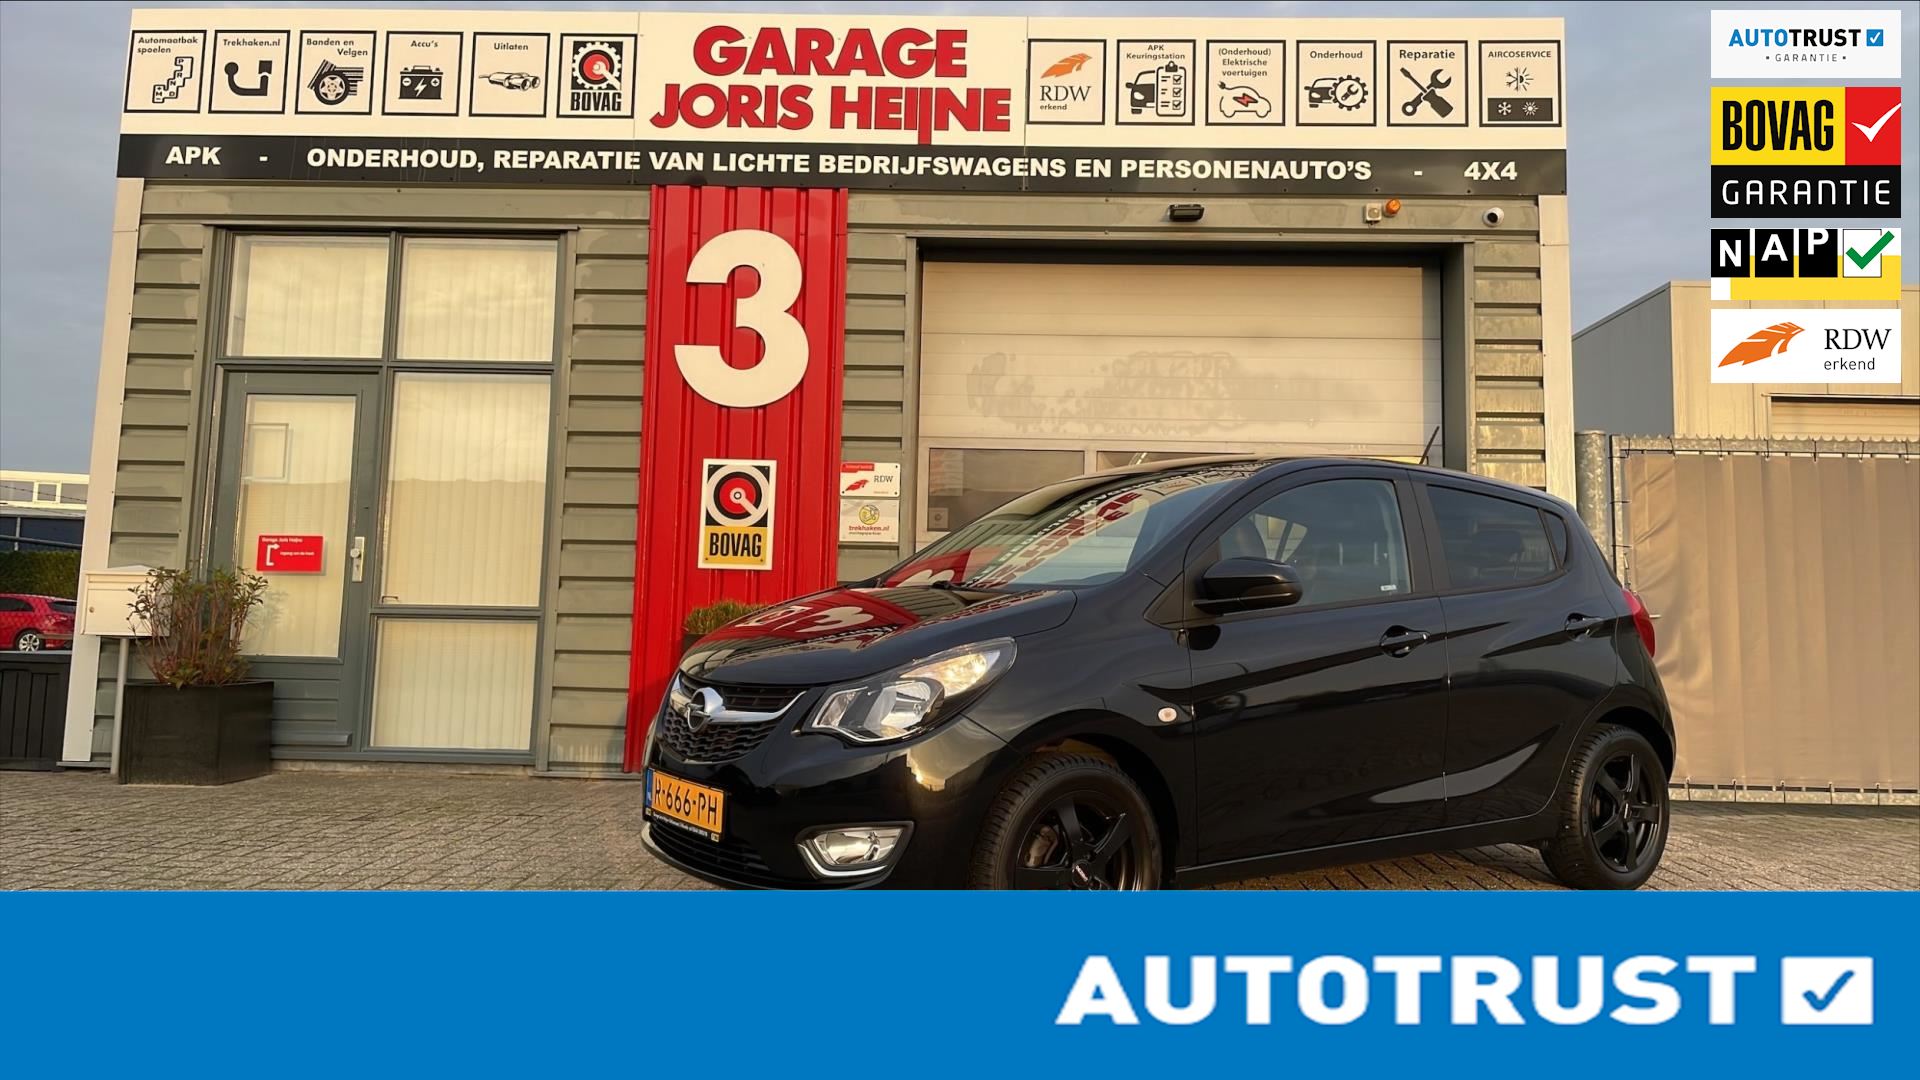 Opel KARL occasion - Garage Joris Heijne